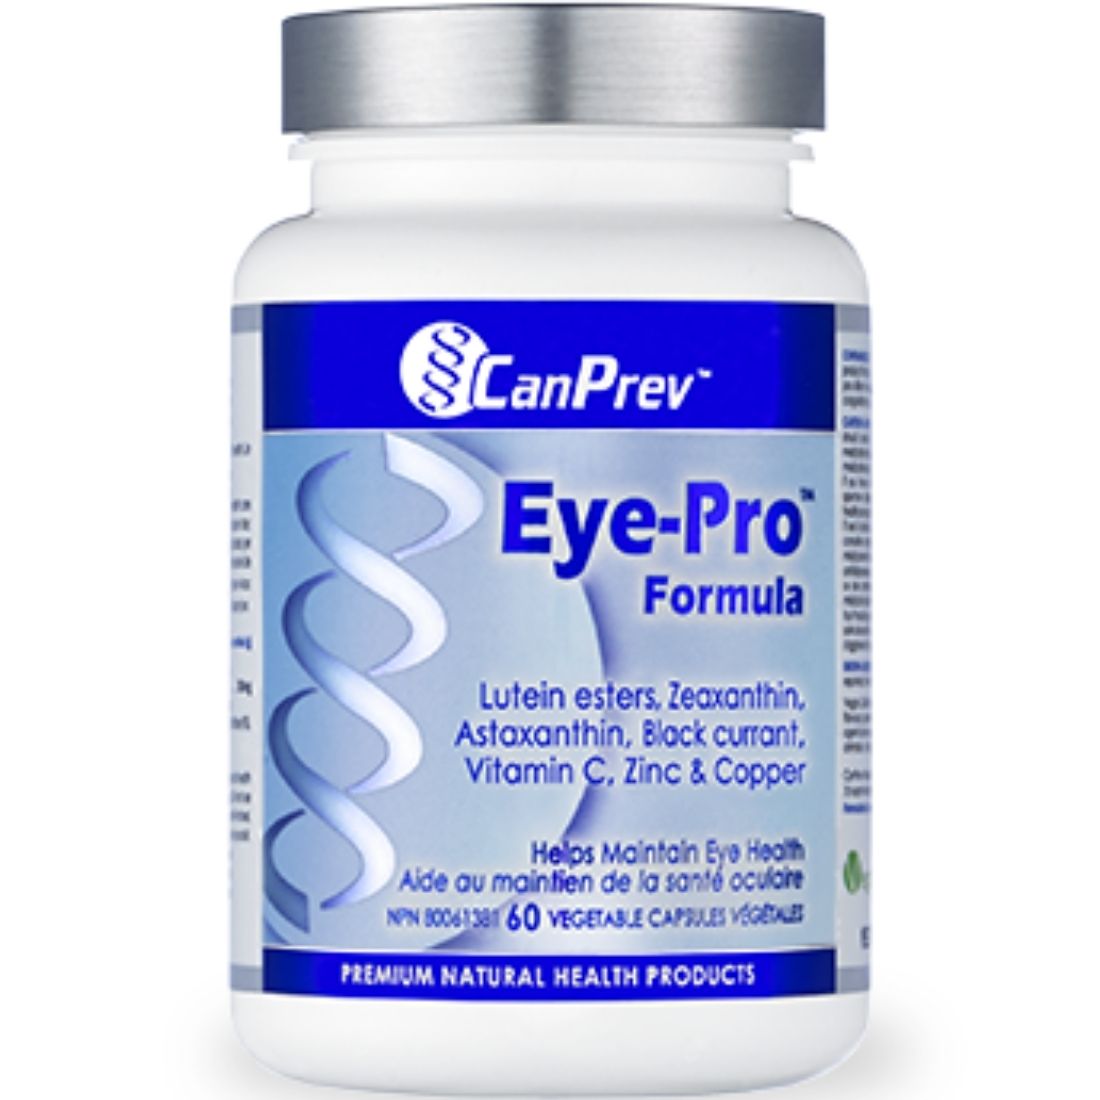 CanPrev Eye-Pro, 60 Vegetable Capsules